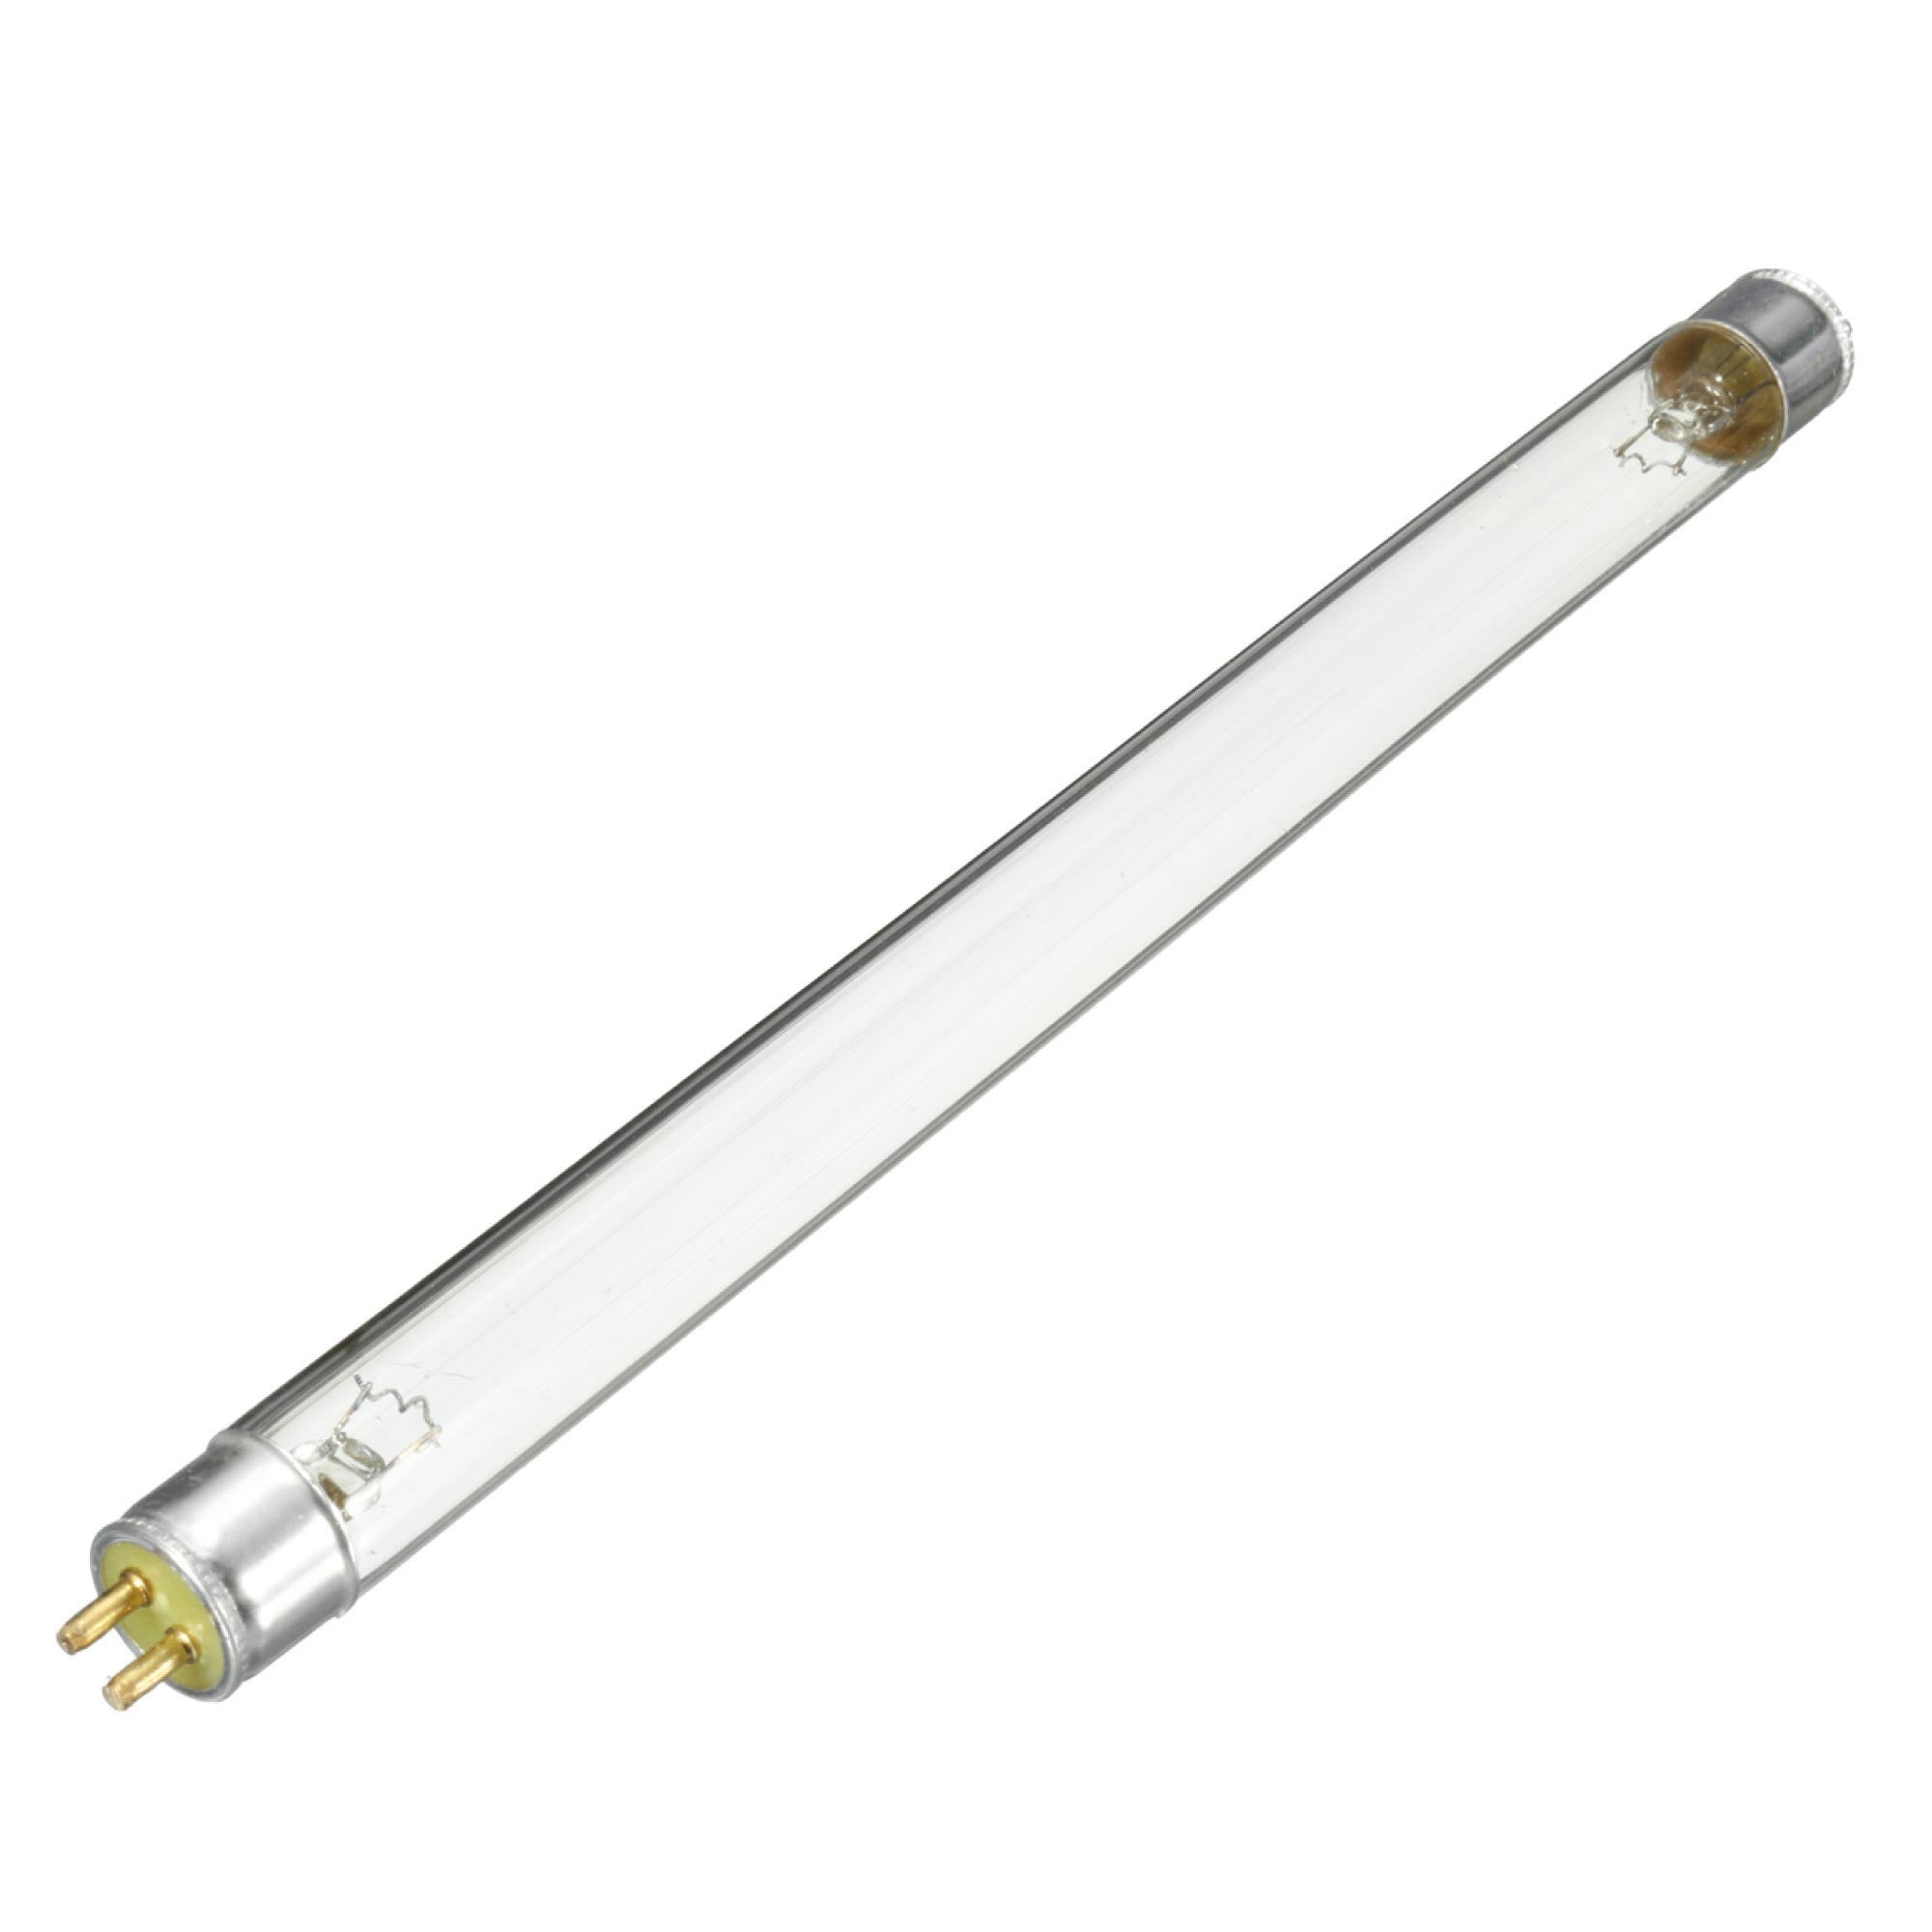 6W Replacement UV Light Lamp Bulb Sterilising Disinfecting Germicidal Ozone Tube